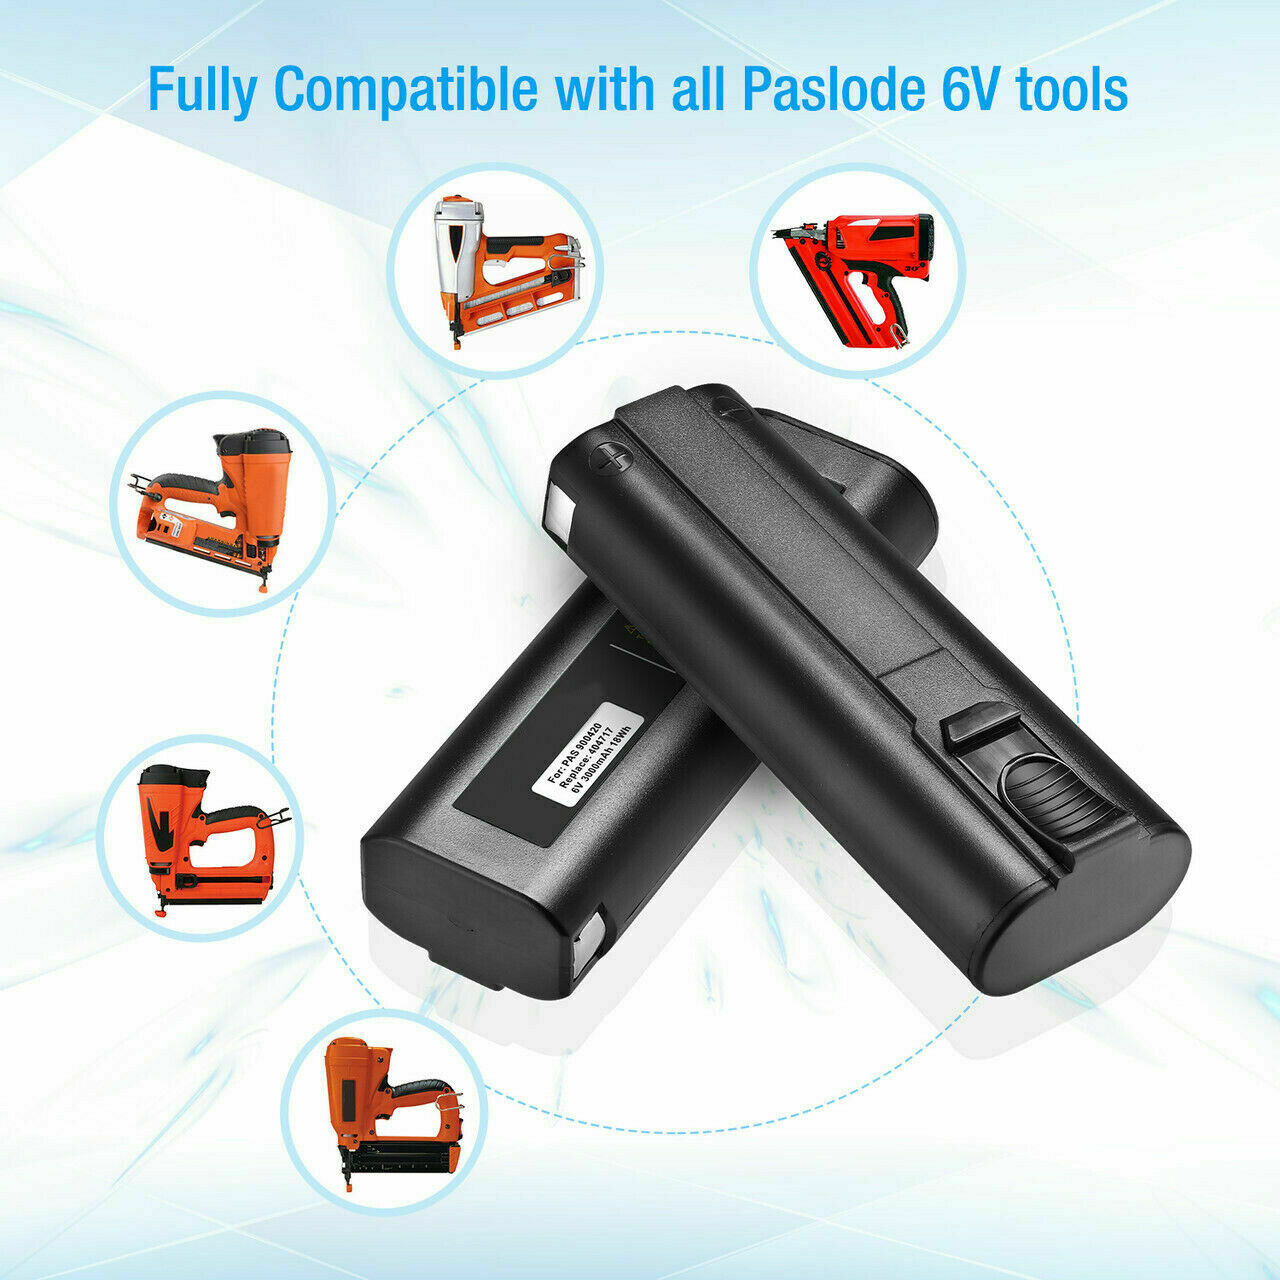 6V Paslode Trim Nail Gun Battery Buying and Usage Tips